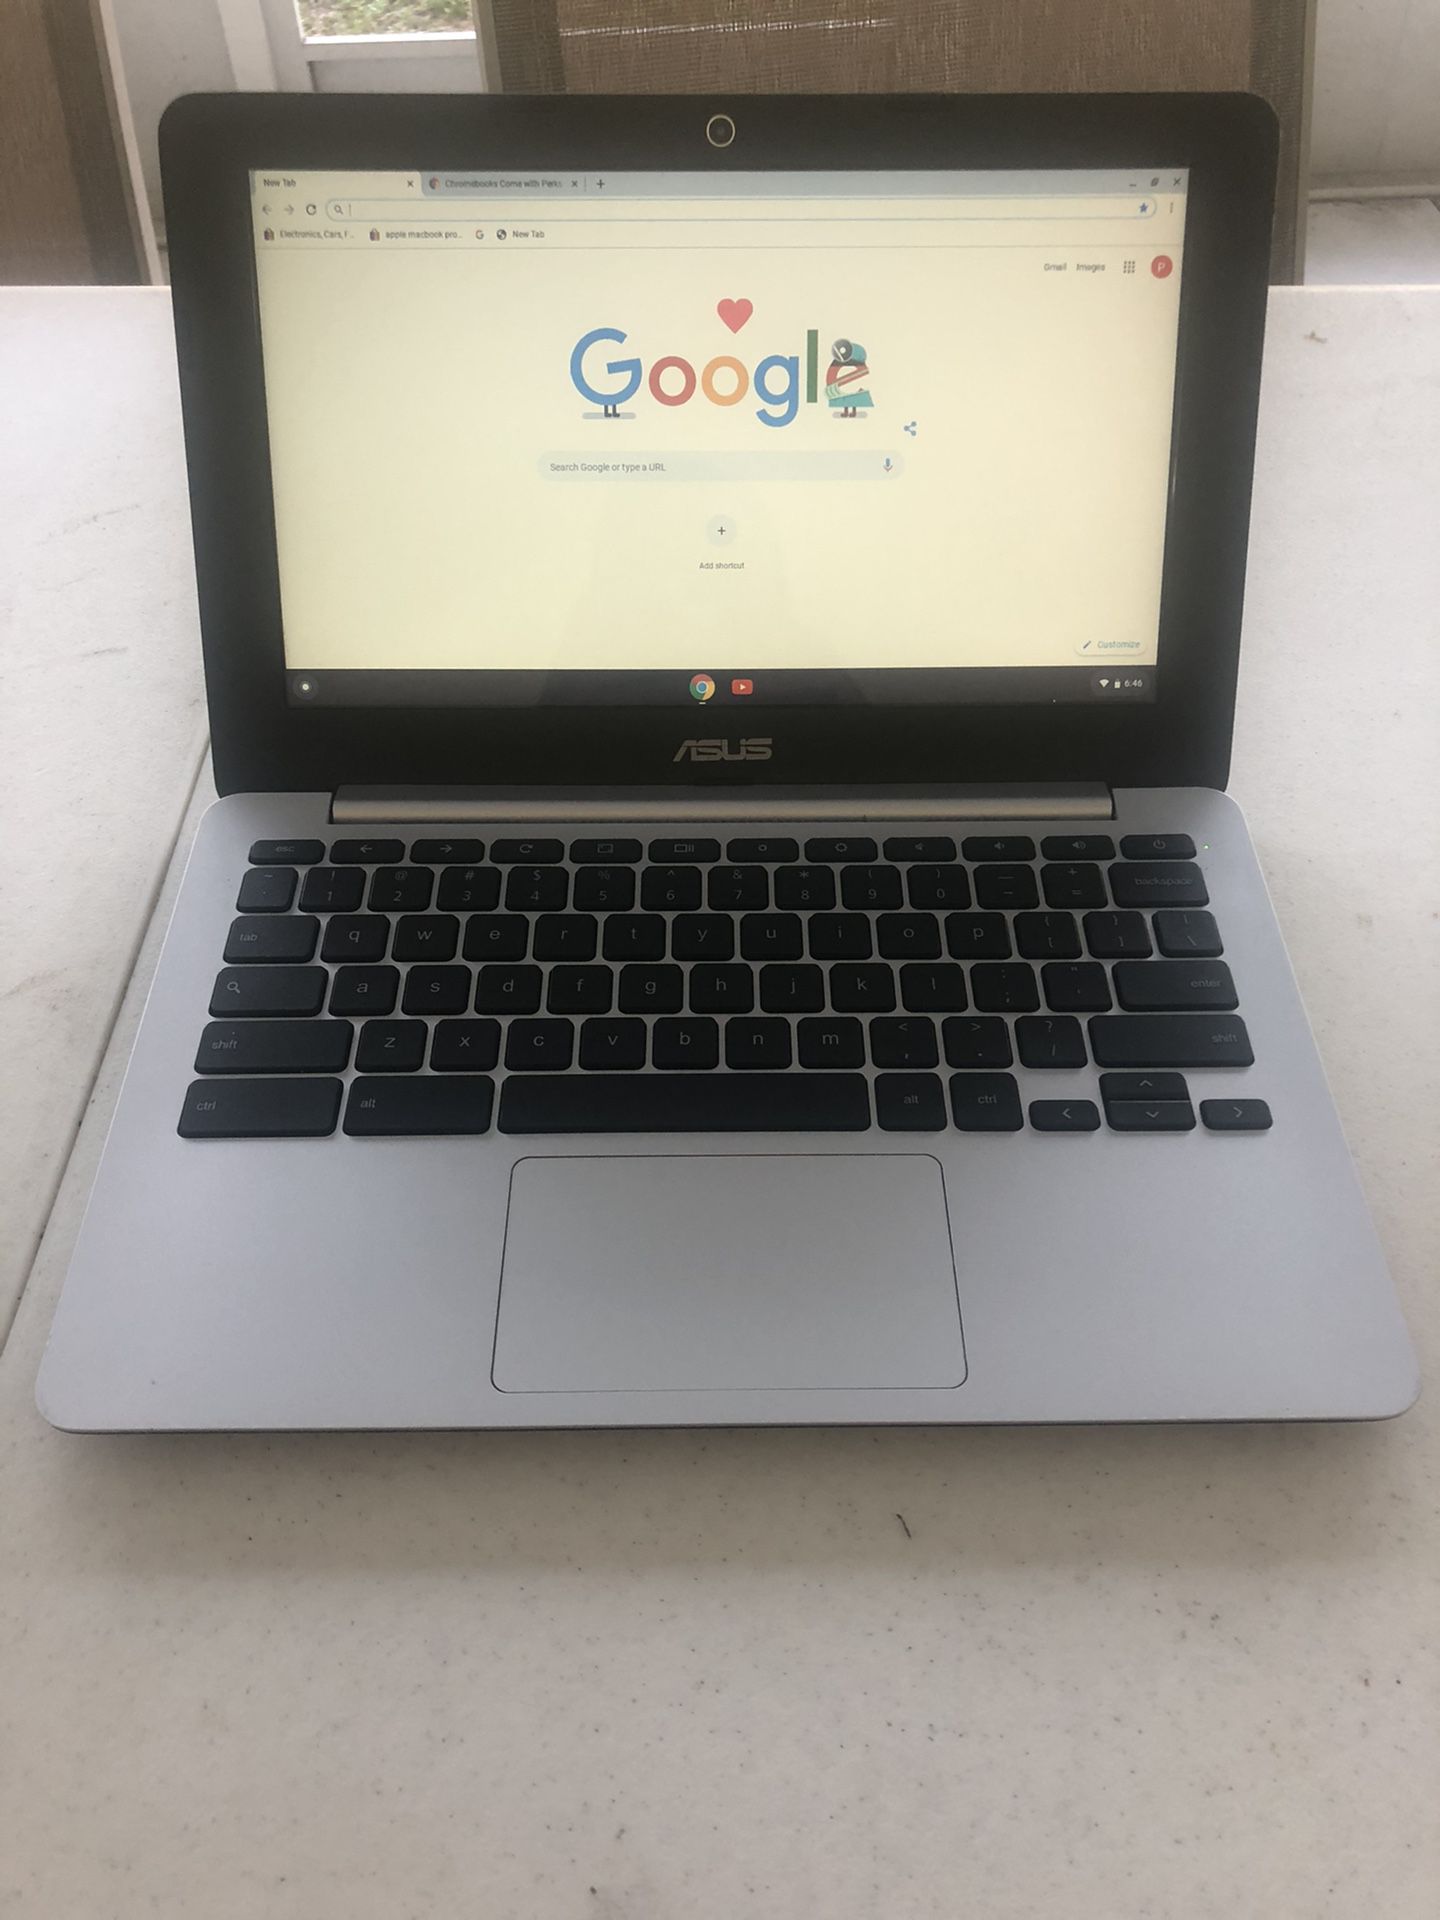 Asus Chromebook/laptop - clean, great shape!